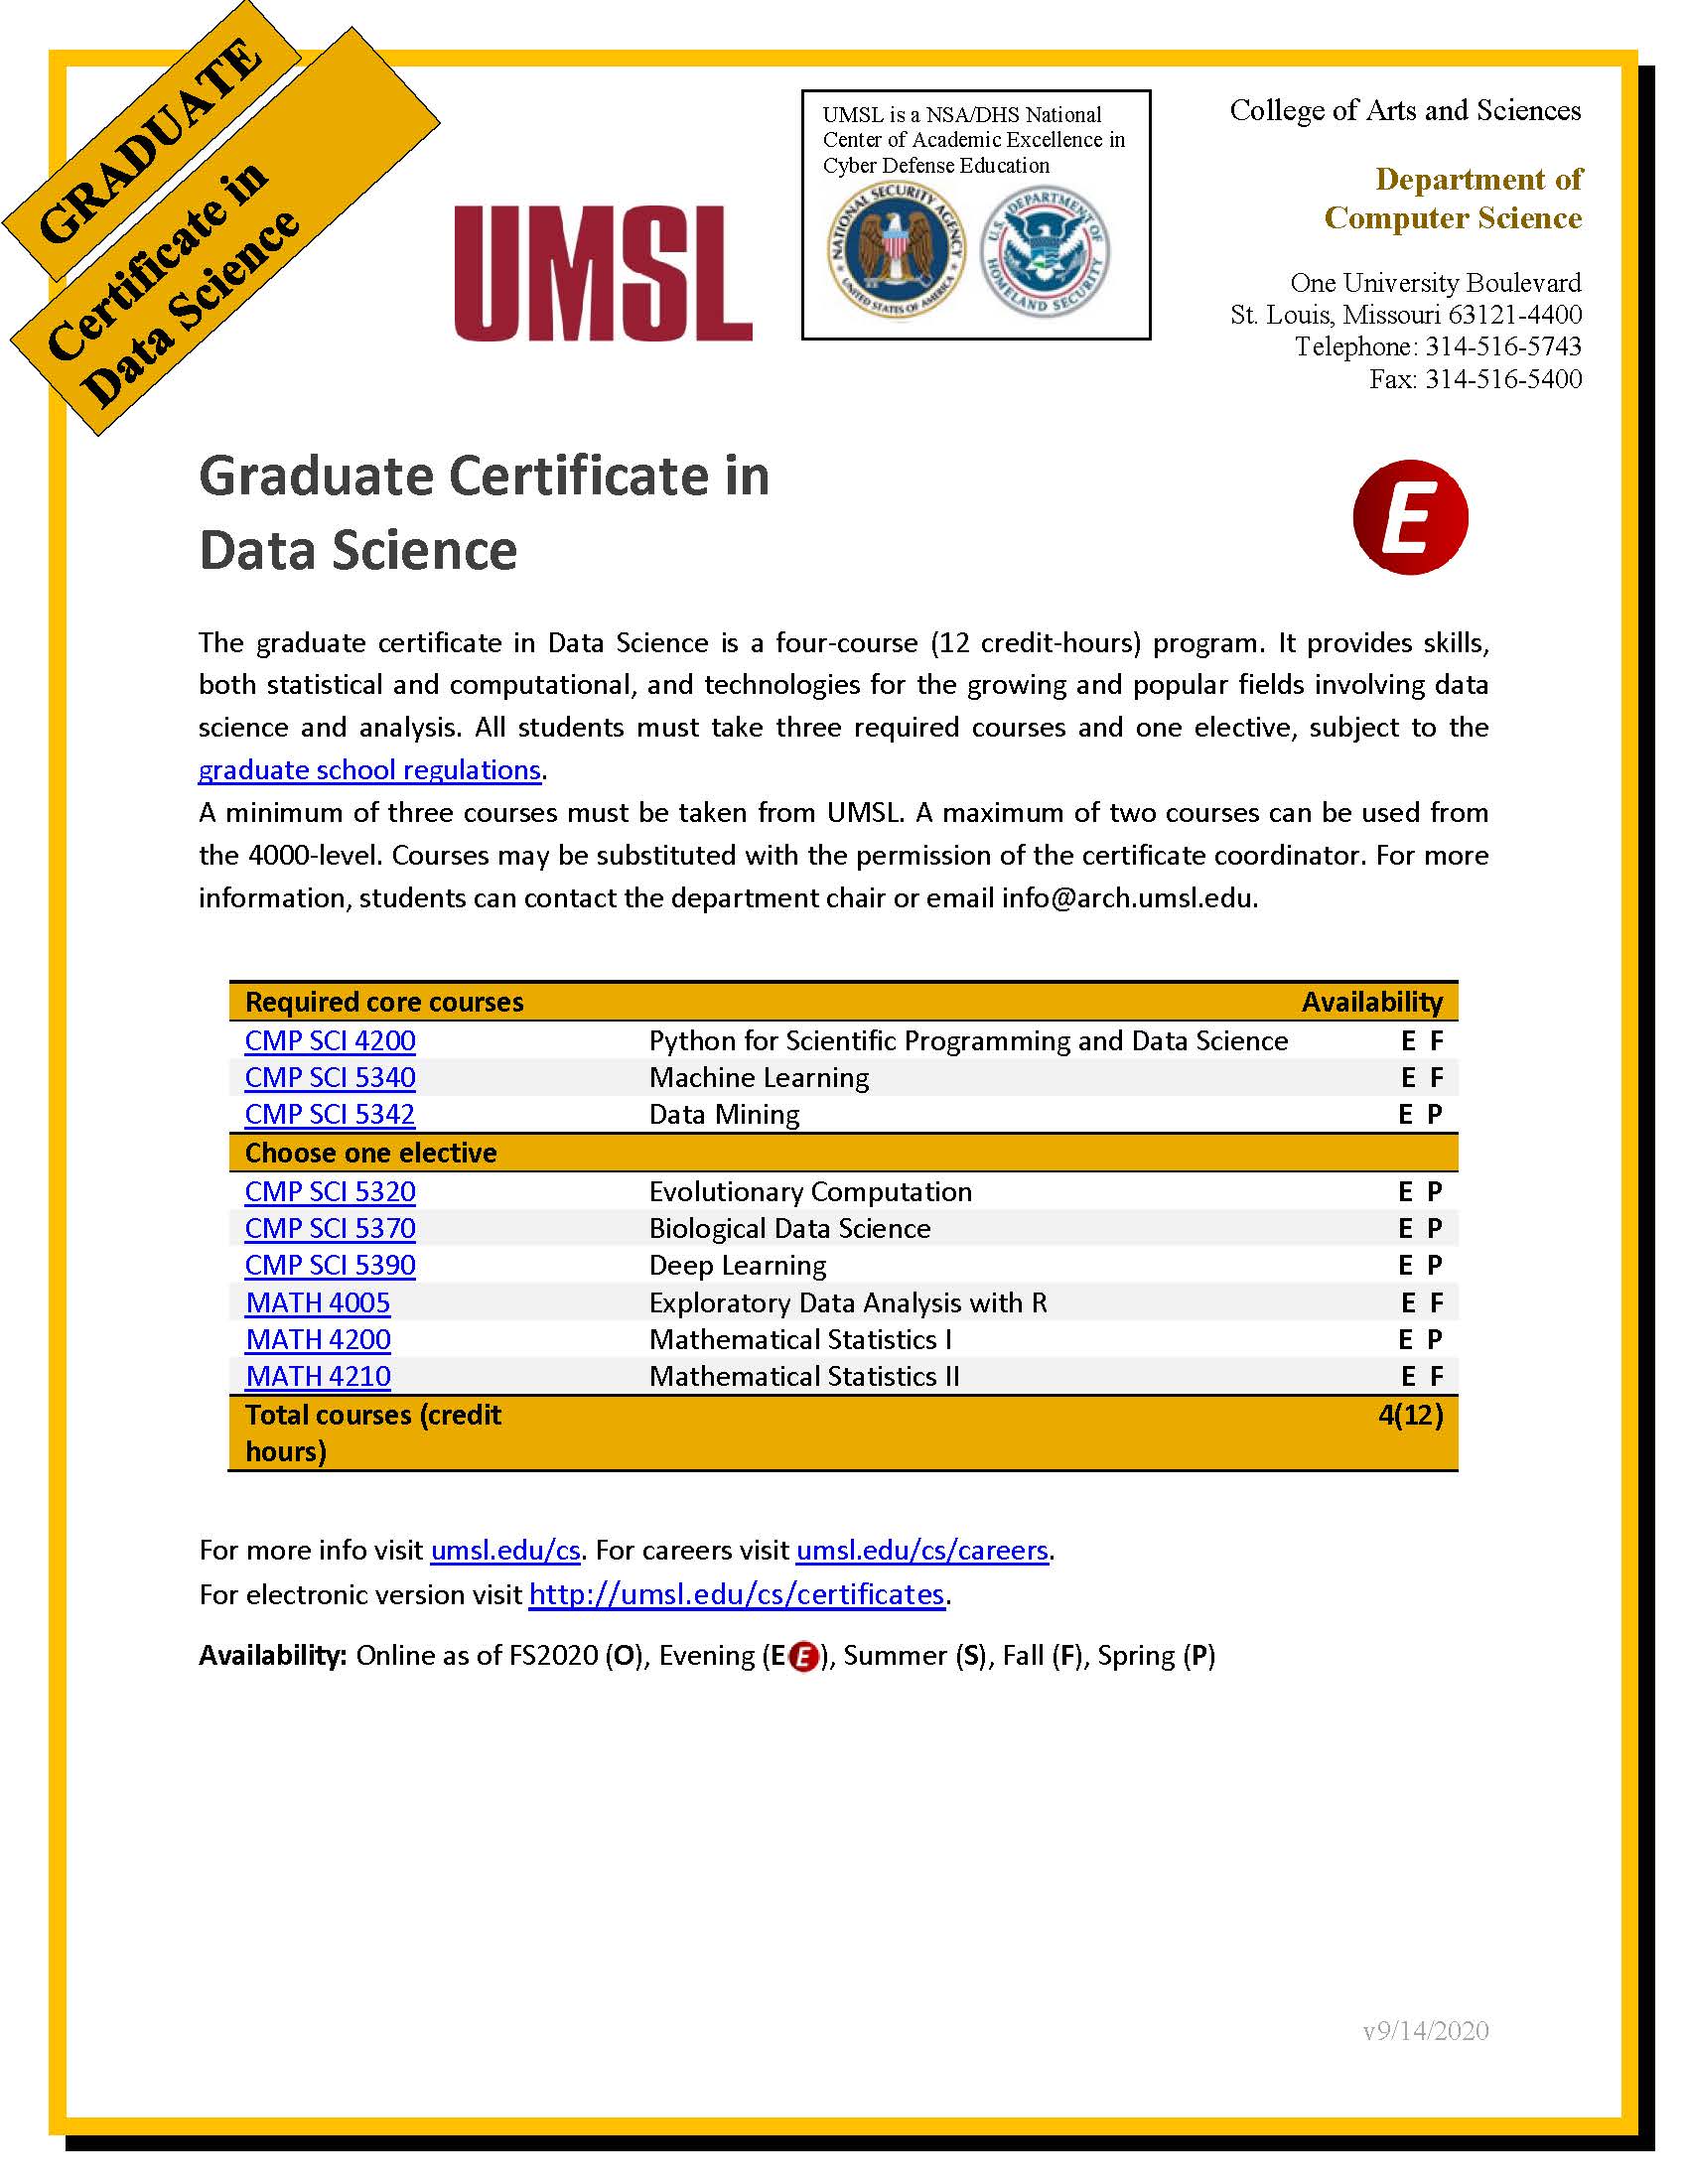 Graduate Certificate in Data Science  UMSL